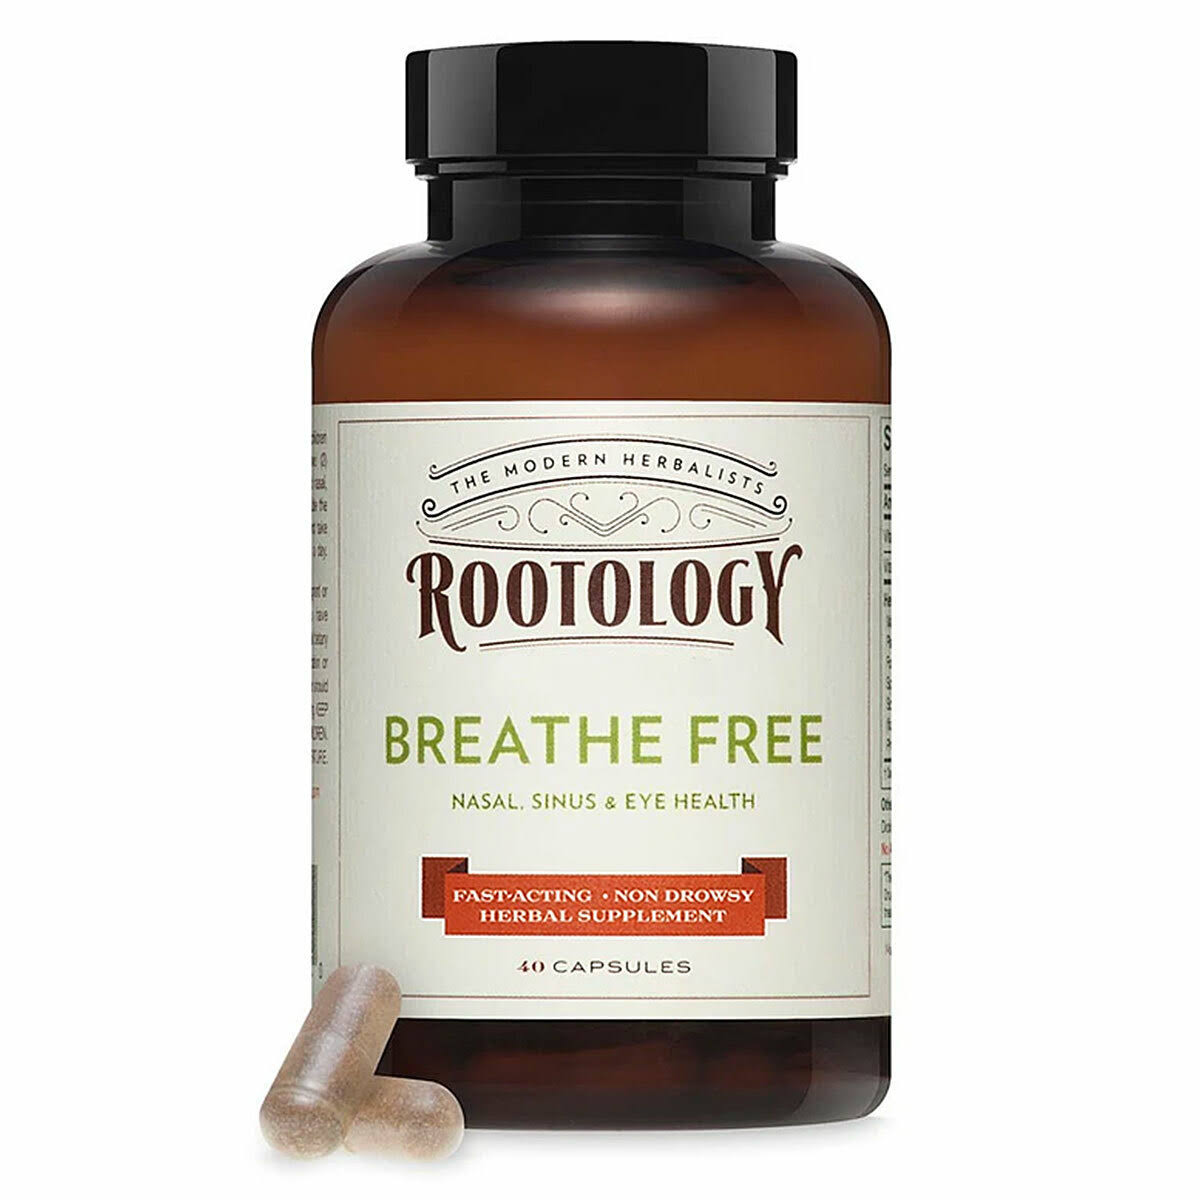 Rootology Breathe Free, Capsules - 40 capsules